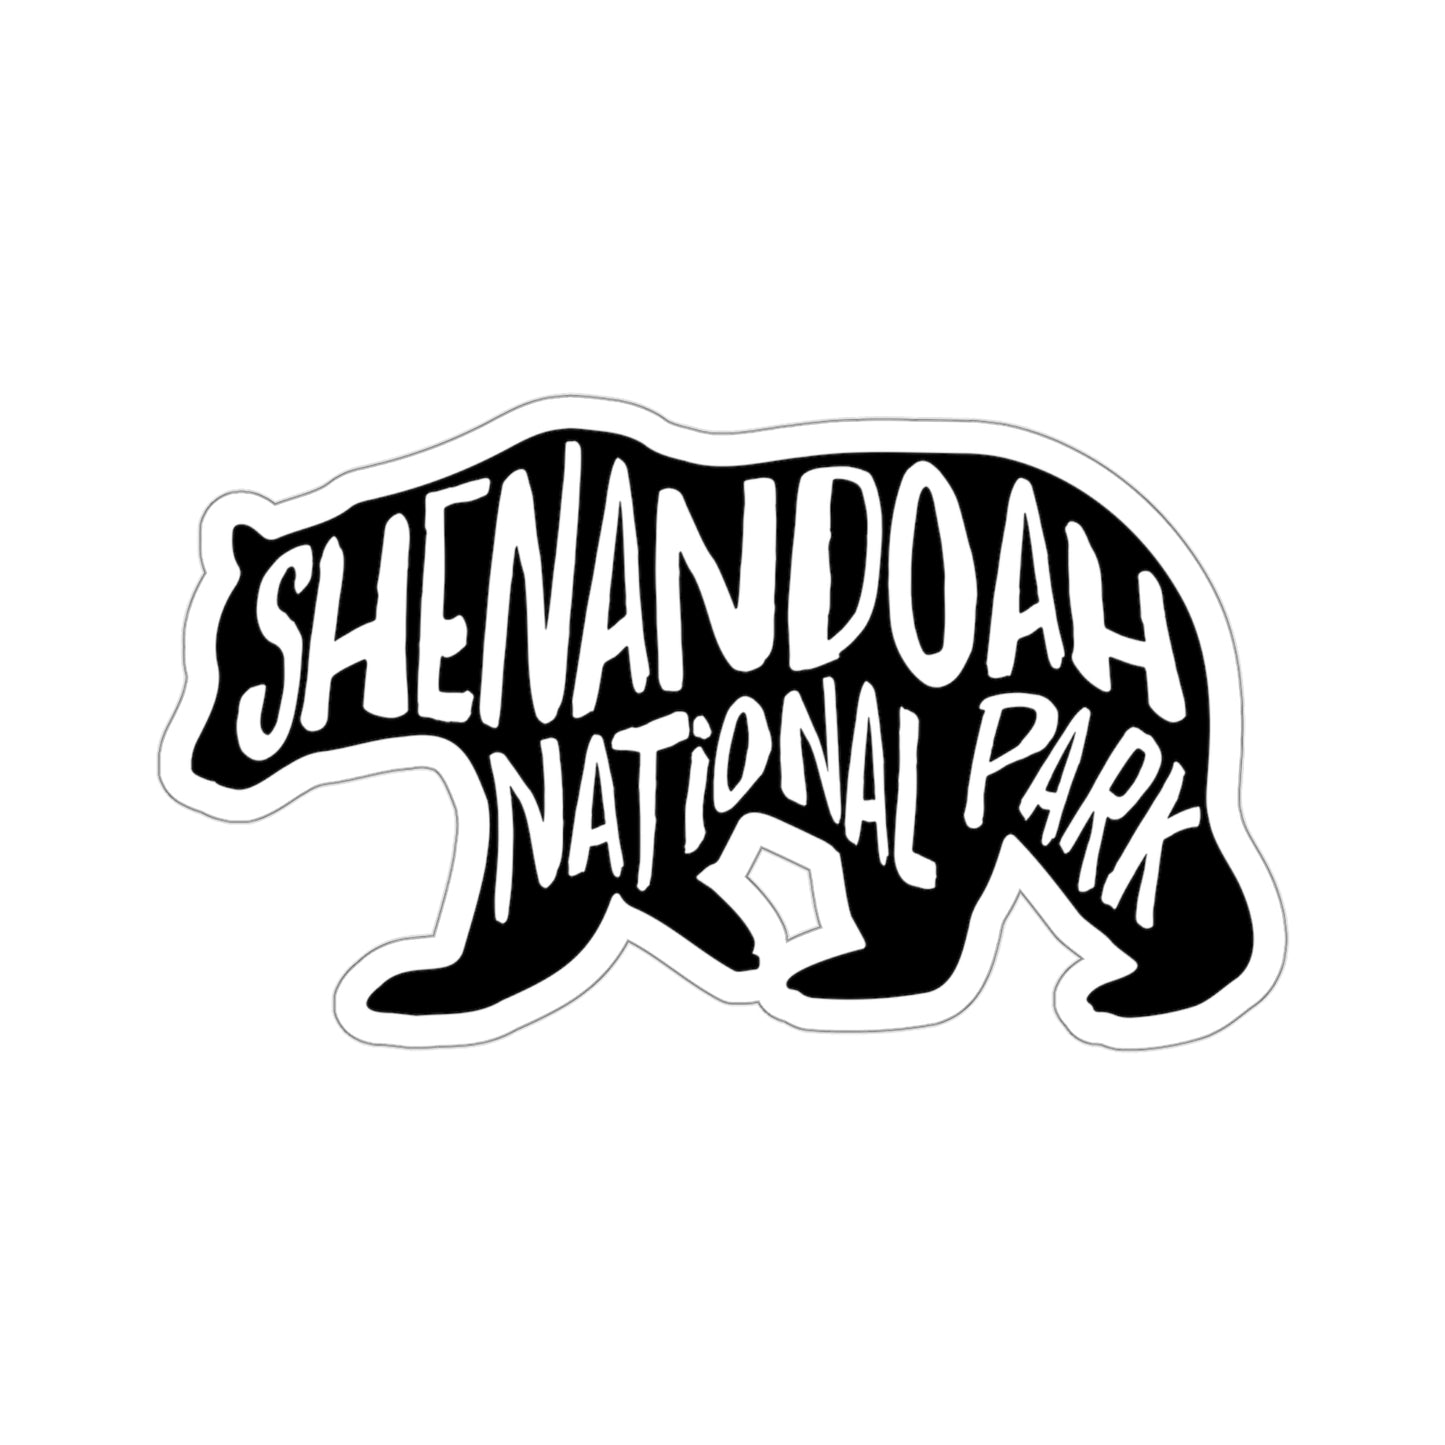 Shenandoah National Park Sticker - Black Bear